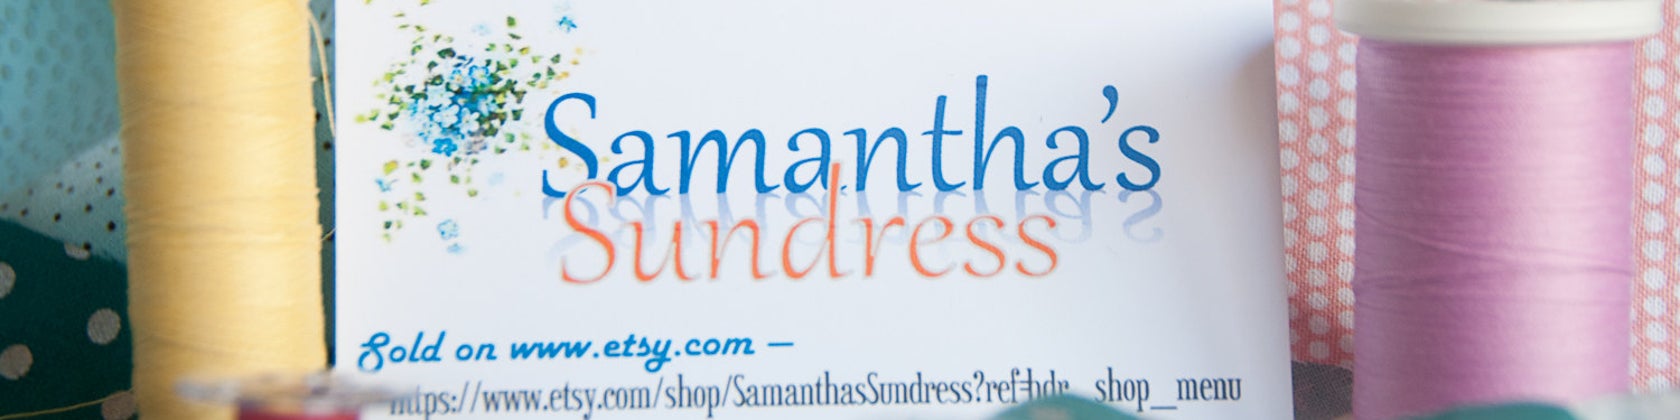 Samantha's Sundress